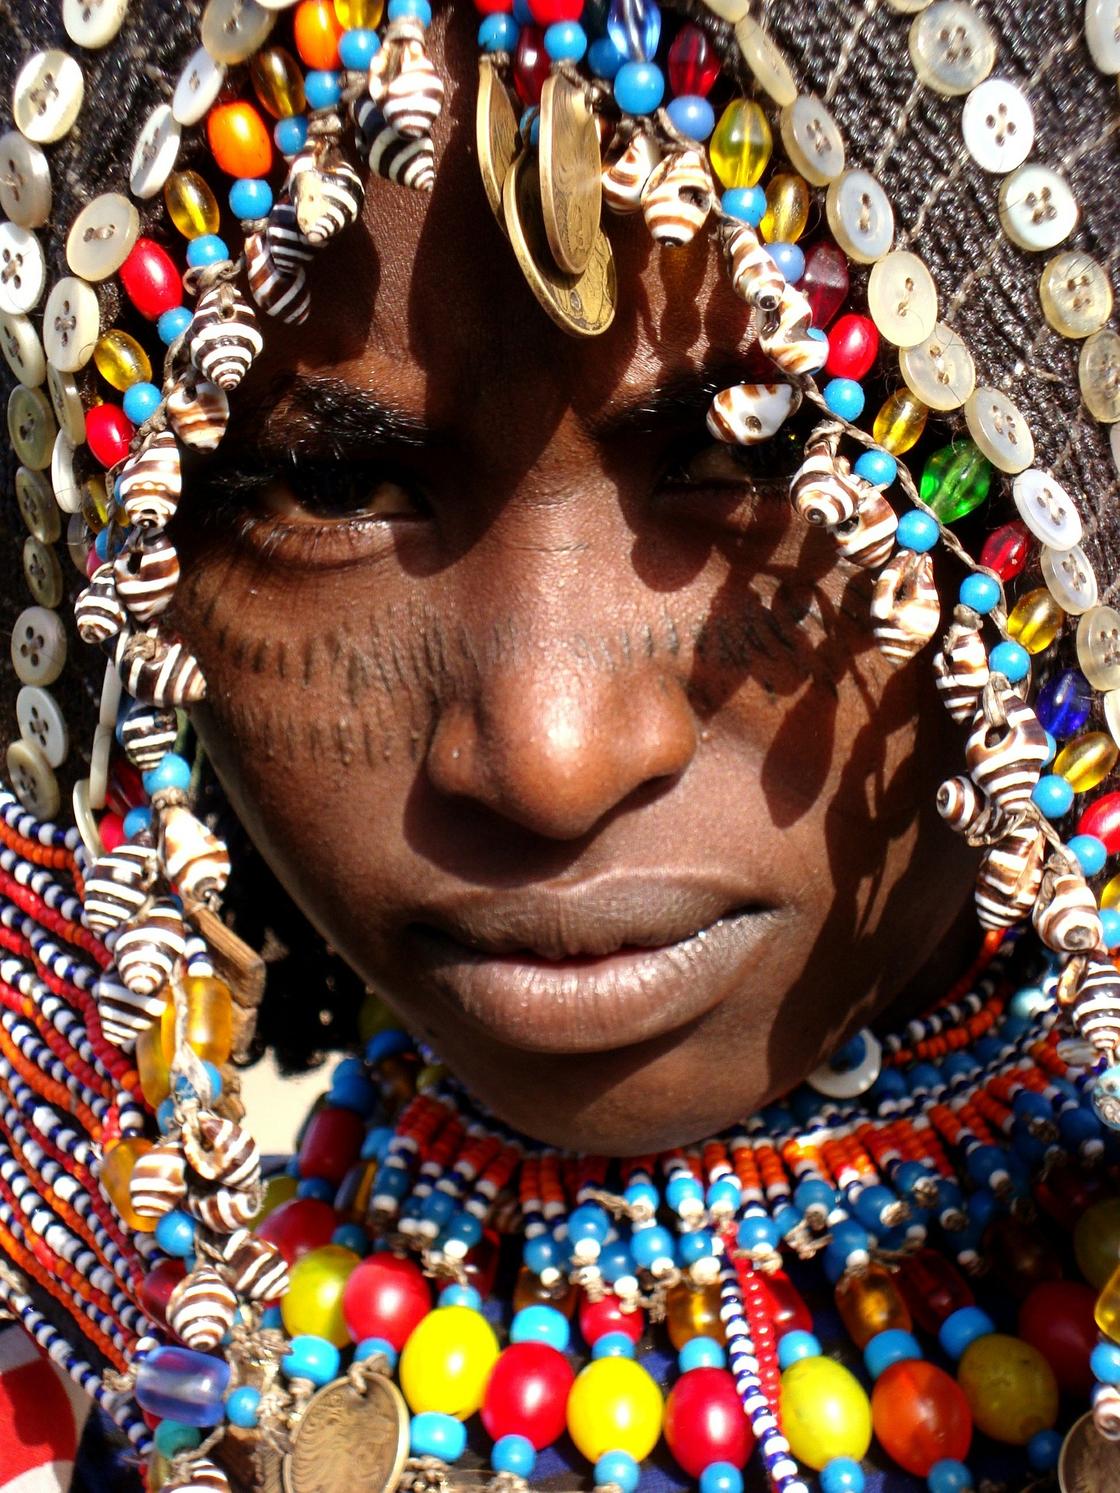 Африканская женщина со шрамами на лице